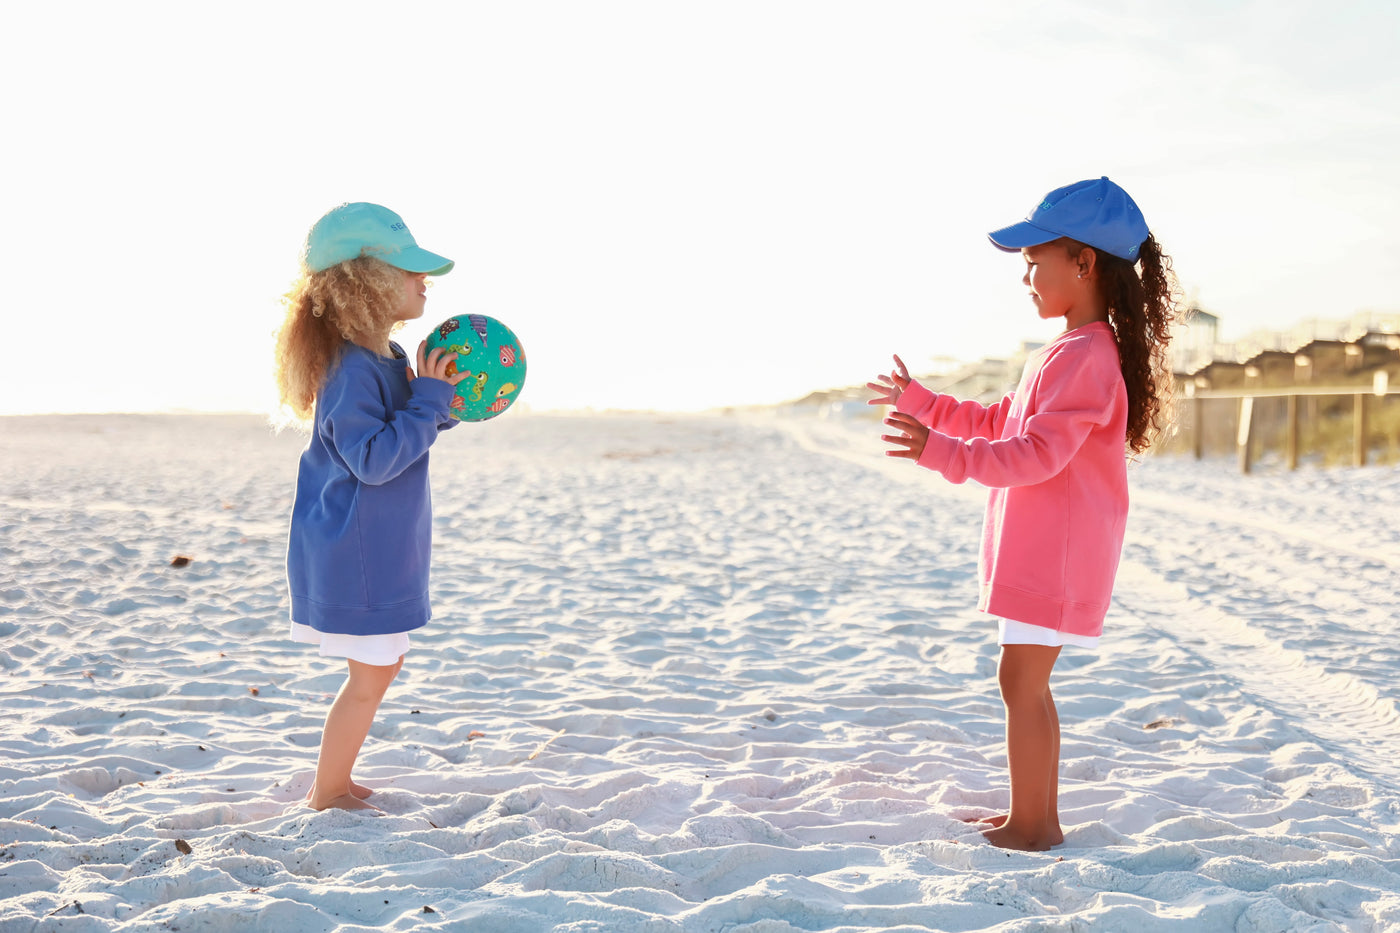 Seaside Kids playing on beach in Seaside Sweatshirts and Seaside Hats